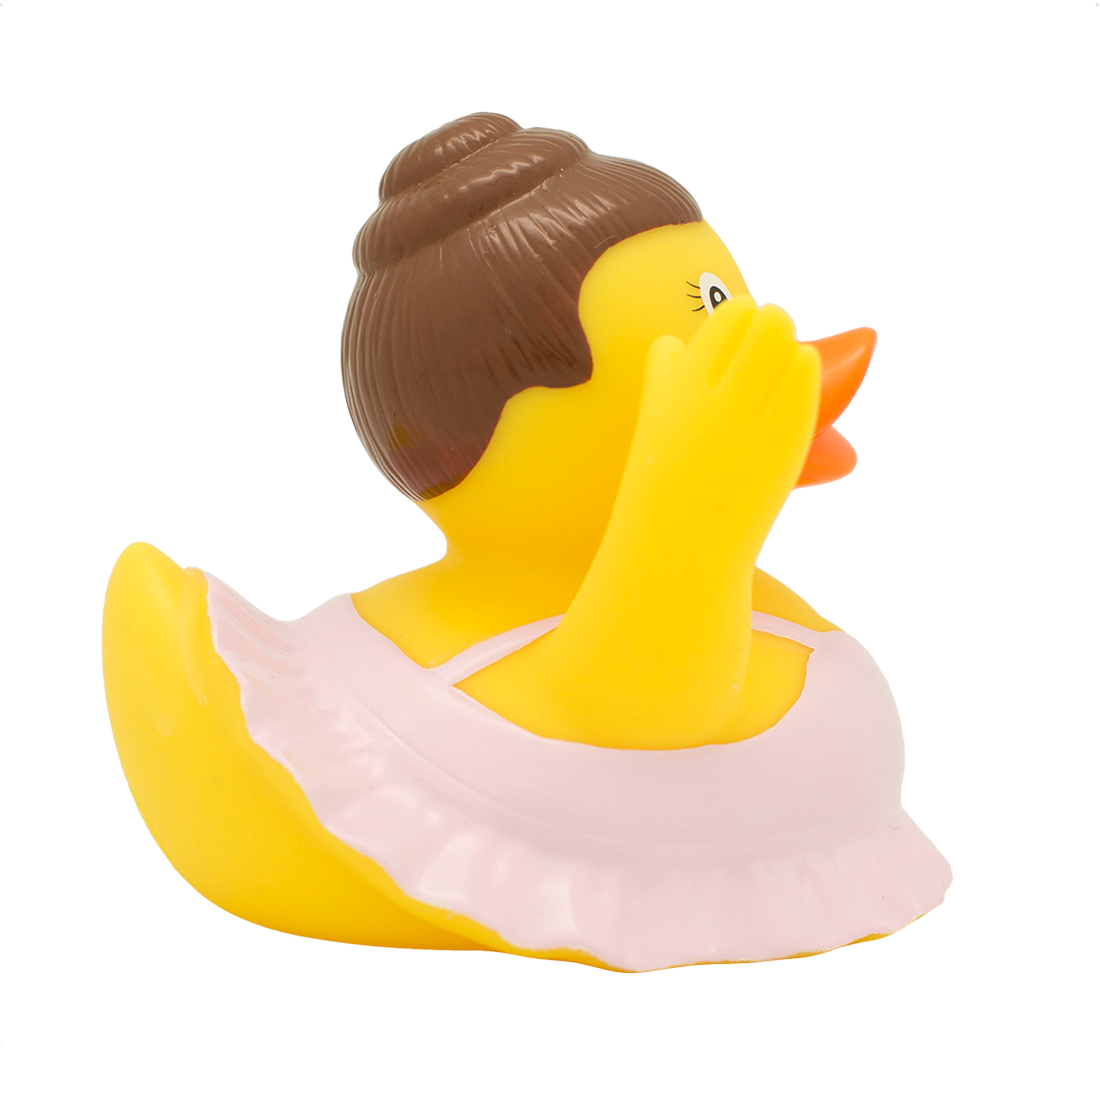 Star dancer duck